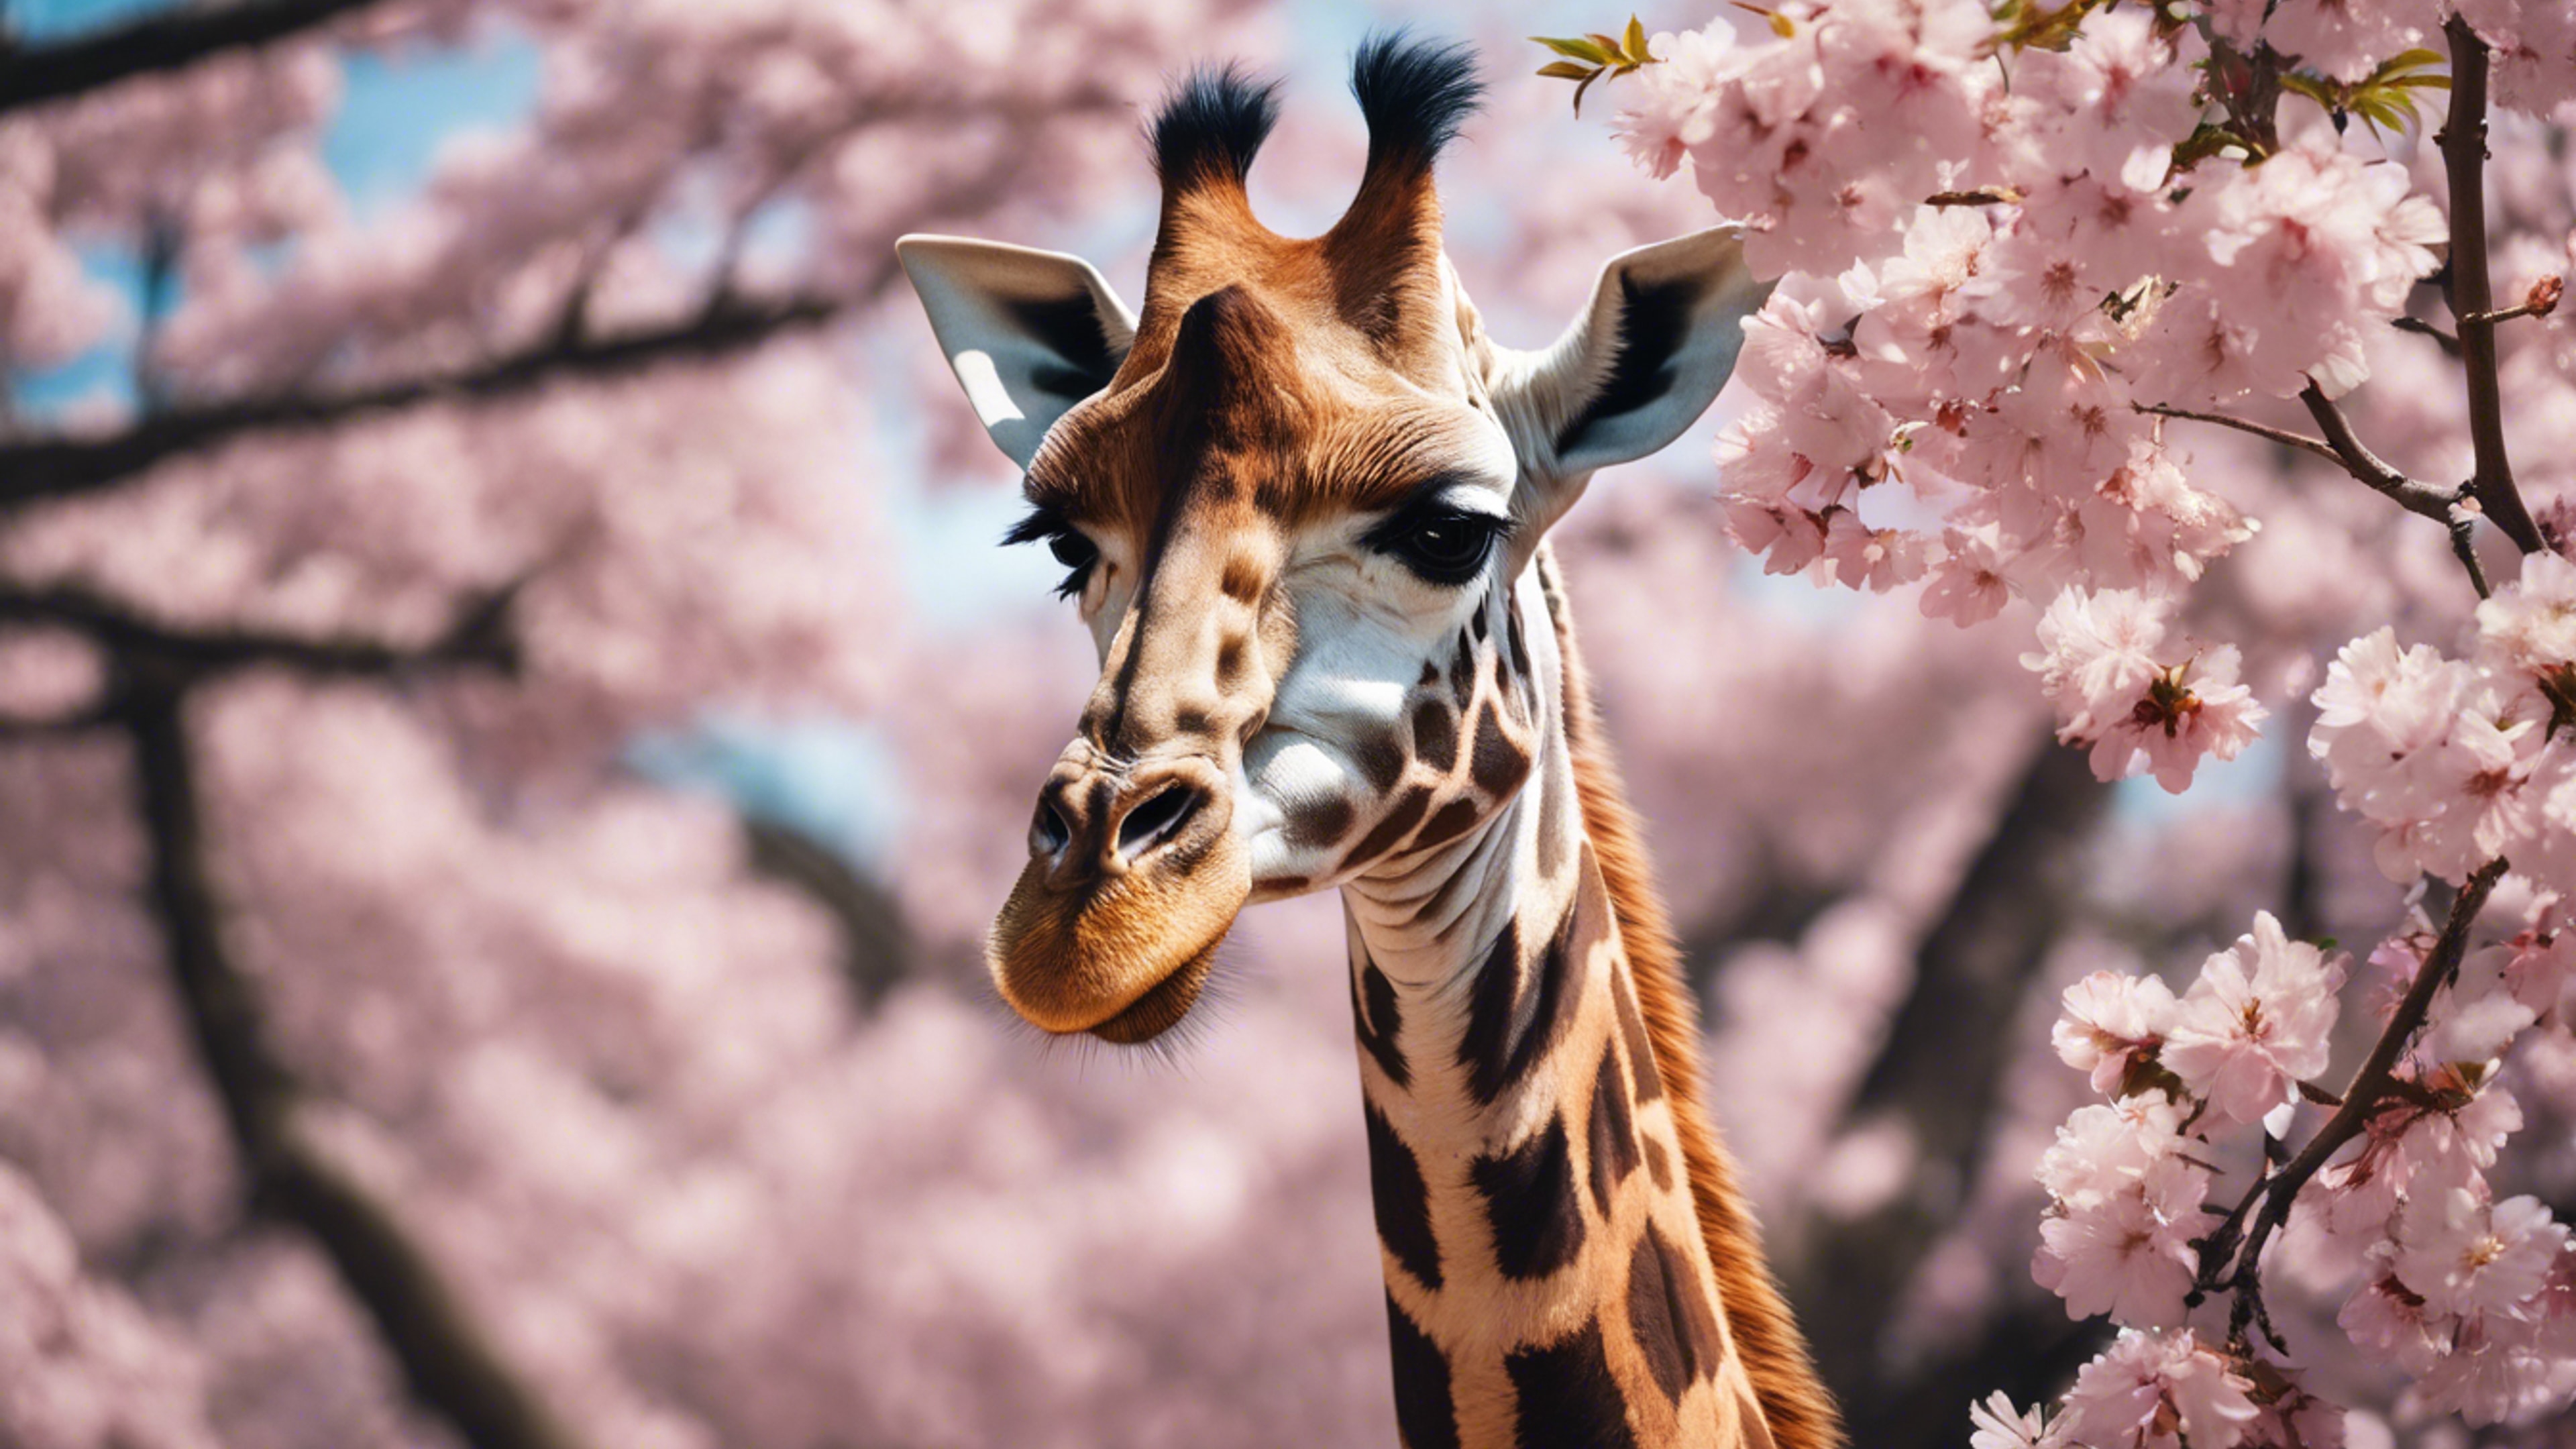 A giraffe hiding playfully behind a cherry blossom tree in full bloom. 墙纸[1212acafafba4b4d89bd]